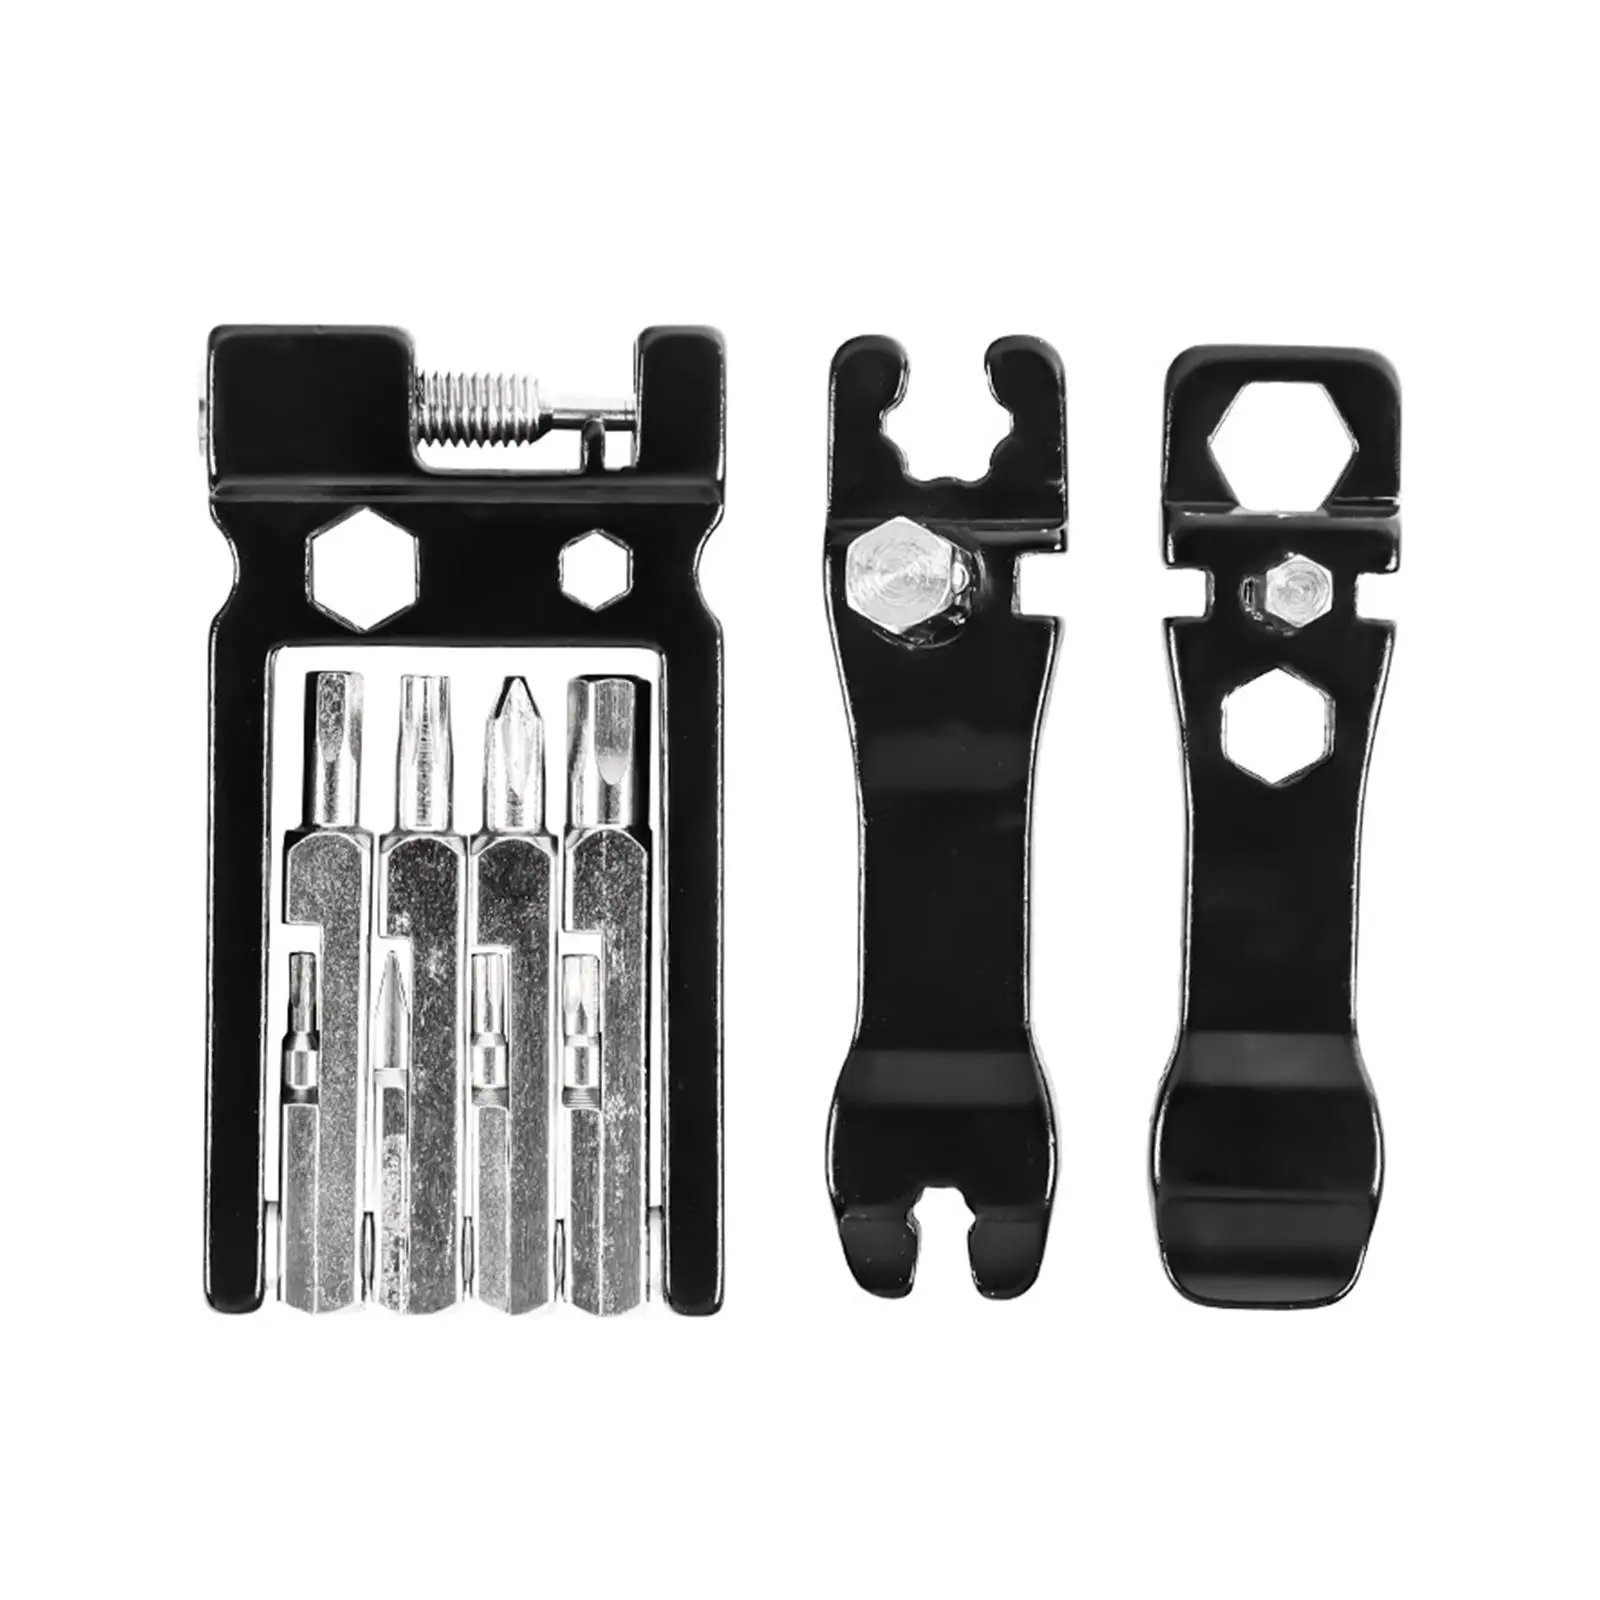 Multifunction Socket Wrench Screwdriver 20 in 1 Accessories Folding Set Bicycle Repair Tools for Camping Mountain Road Bike Bike